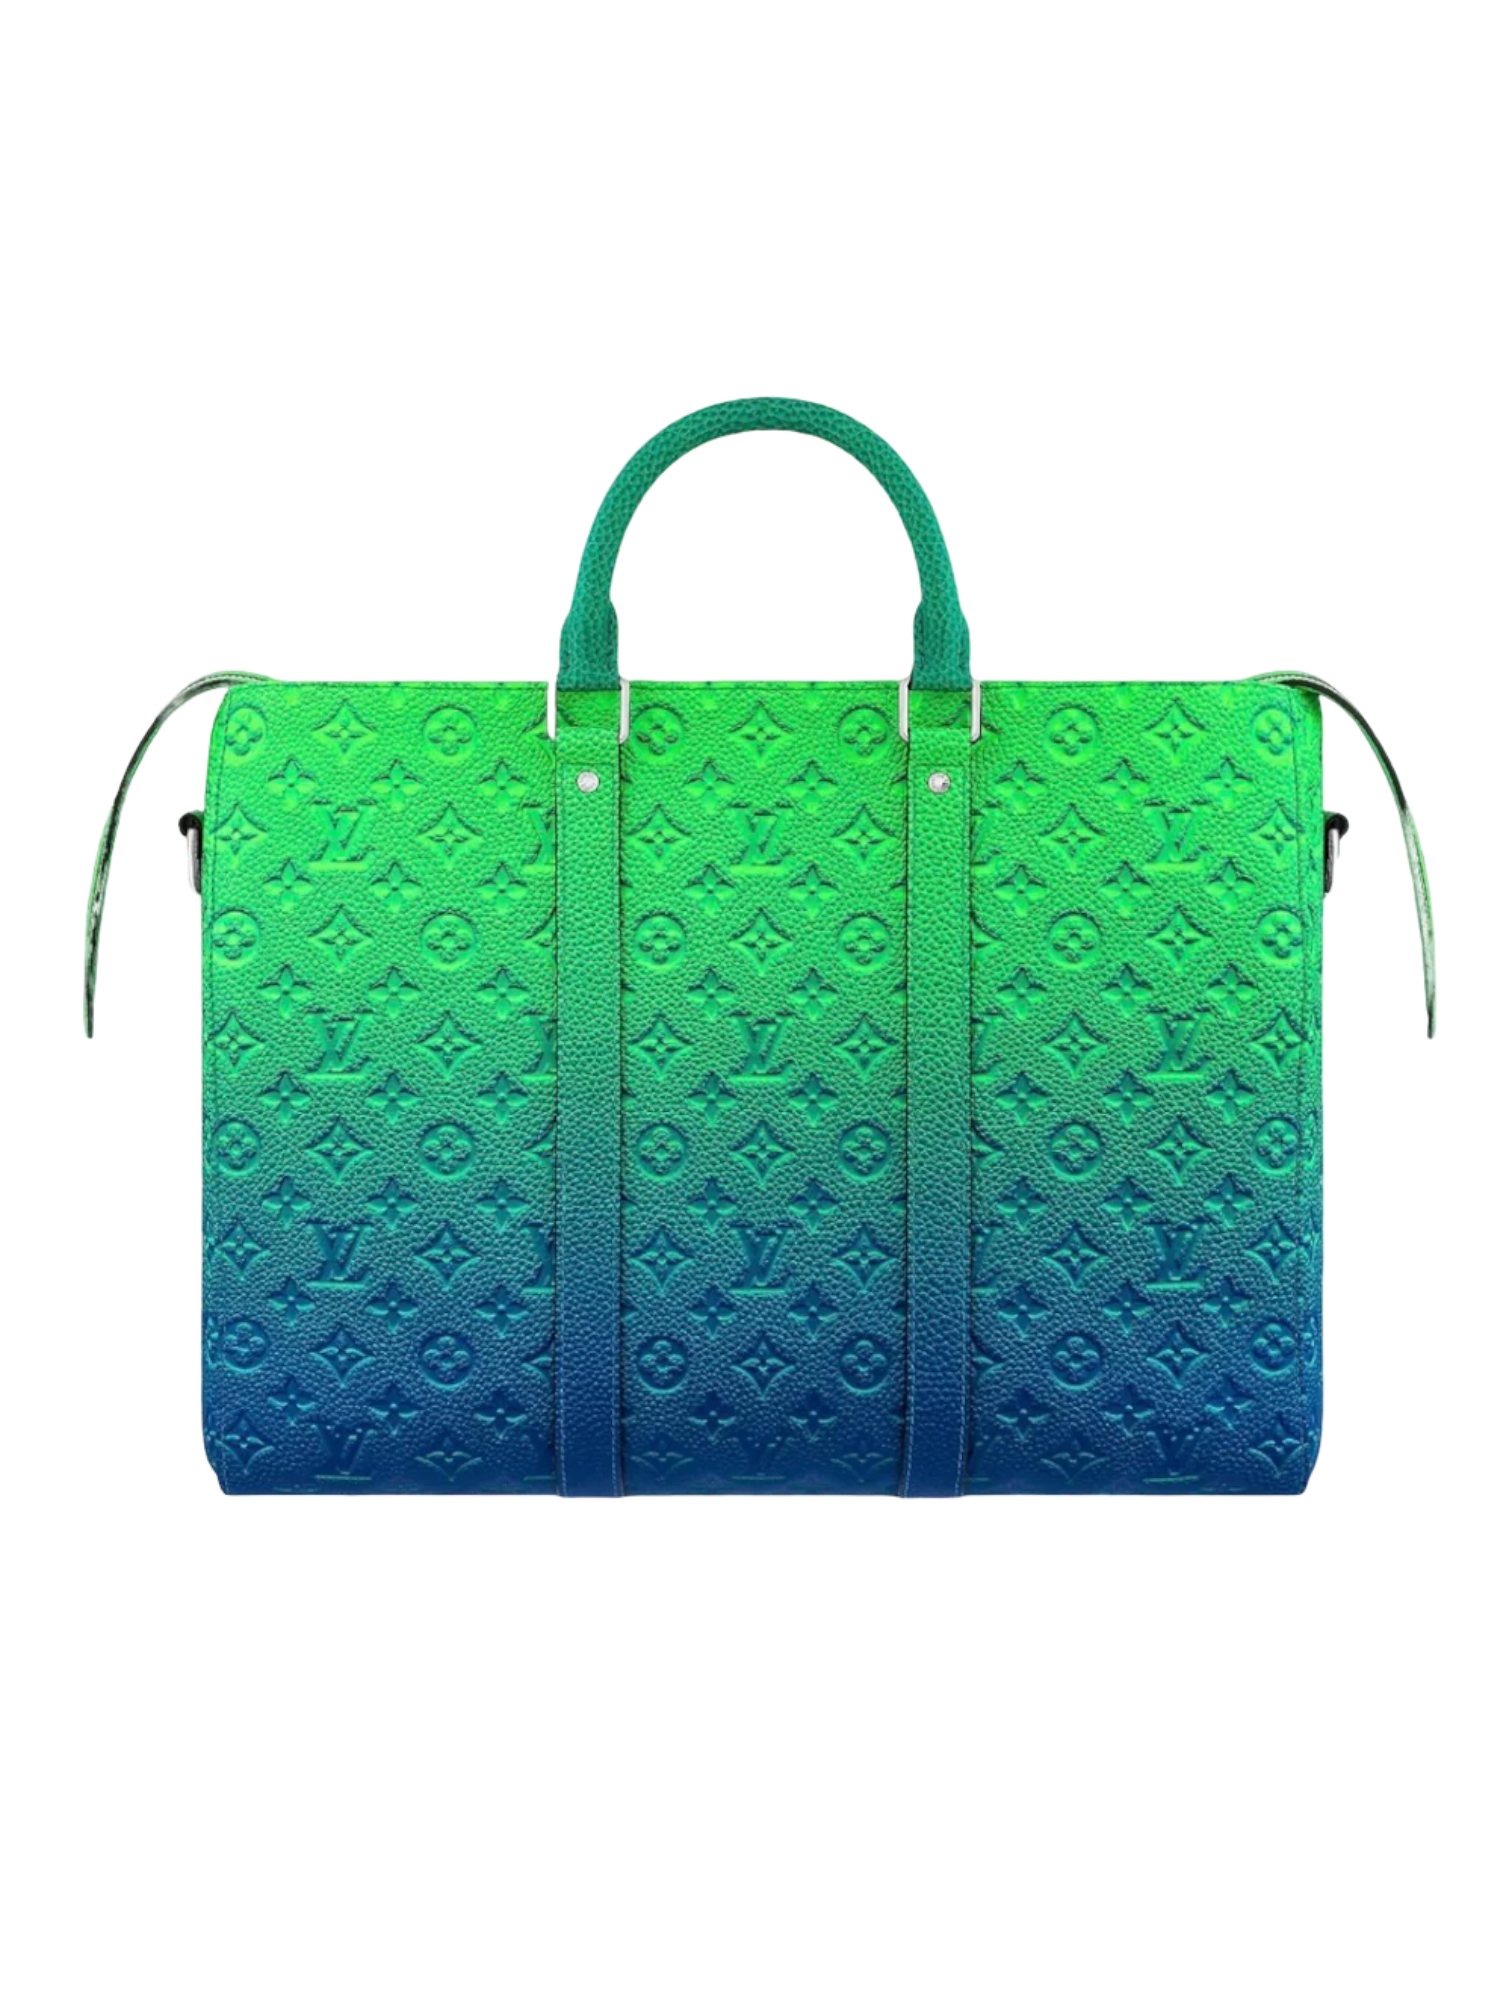 Louis Vuitton Taurillon Illusion Blue Green Keepall